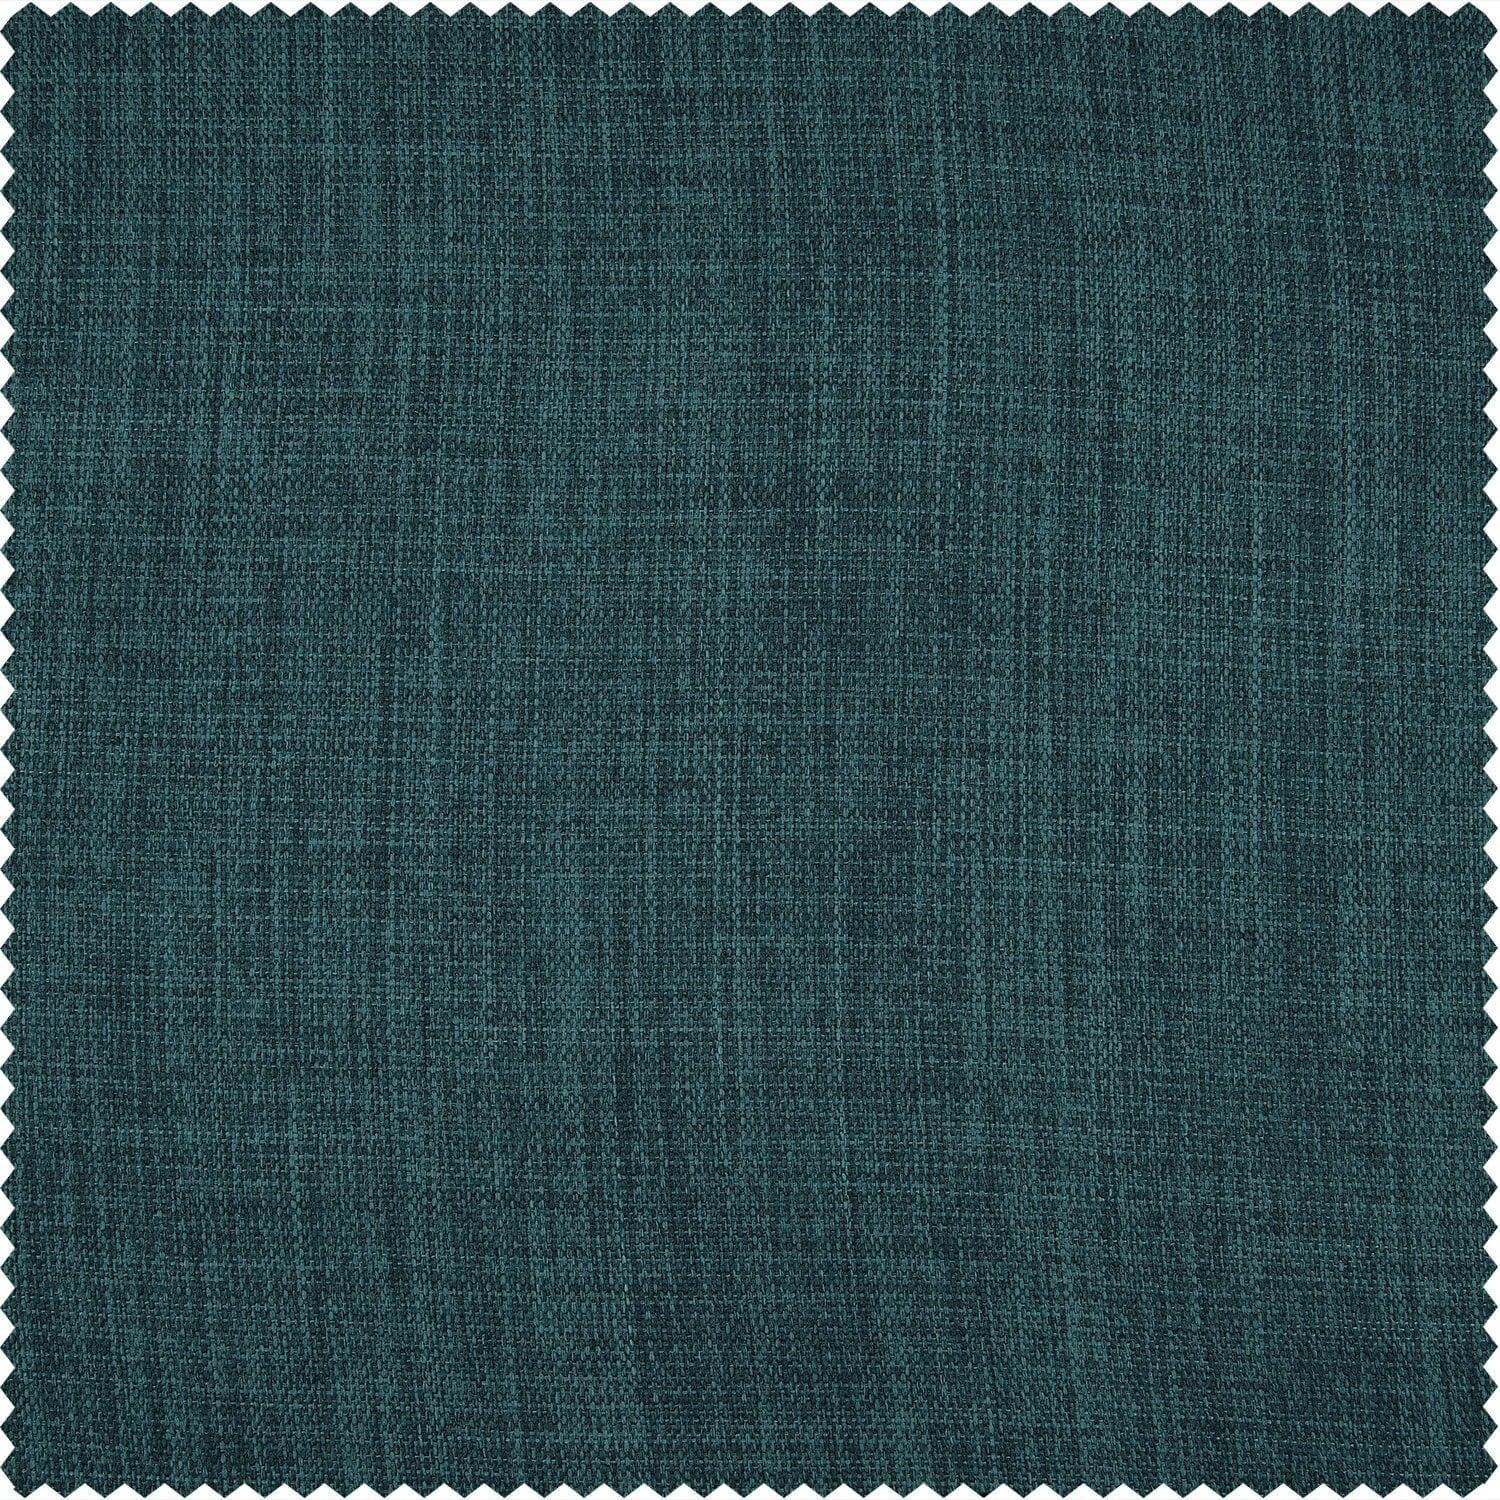 Slate Teal Green Textured Faux Linen Room Darkening Curtain